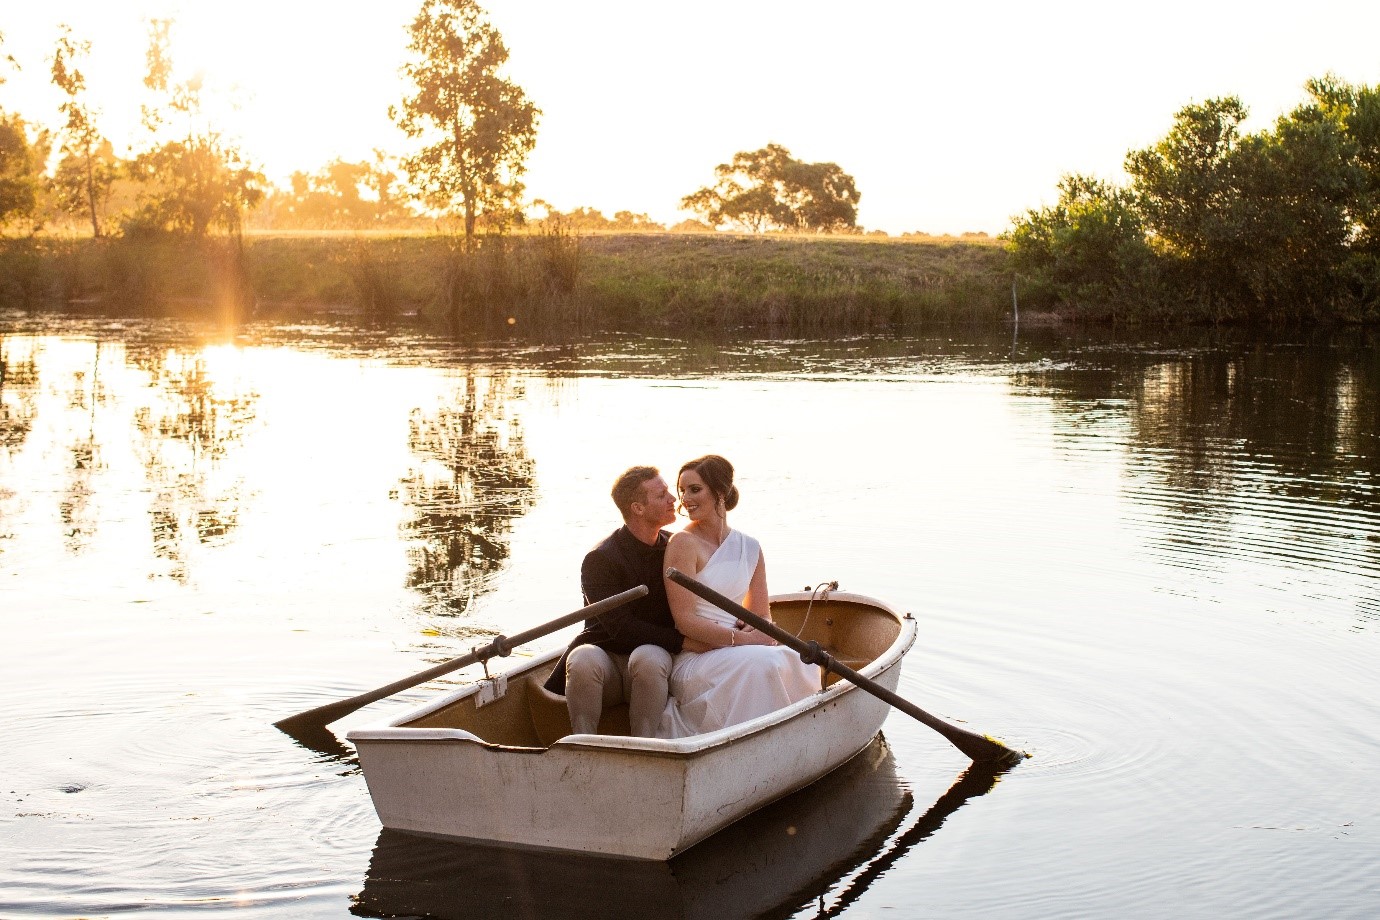 Julie Byrne Tanglewood Estate Wedding Celebrant - Jess and Matt's Wedding on the boat